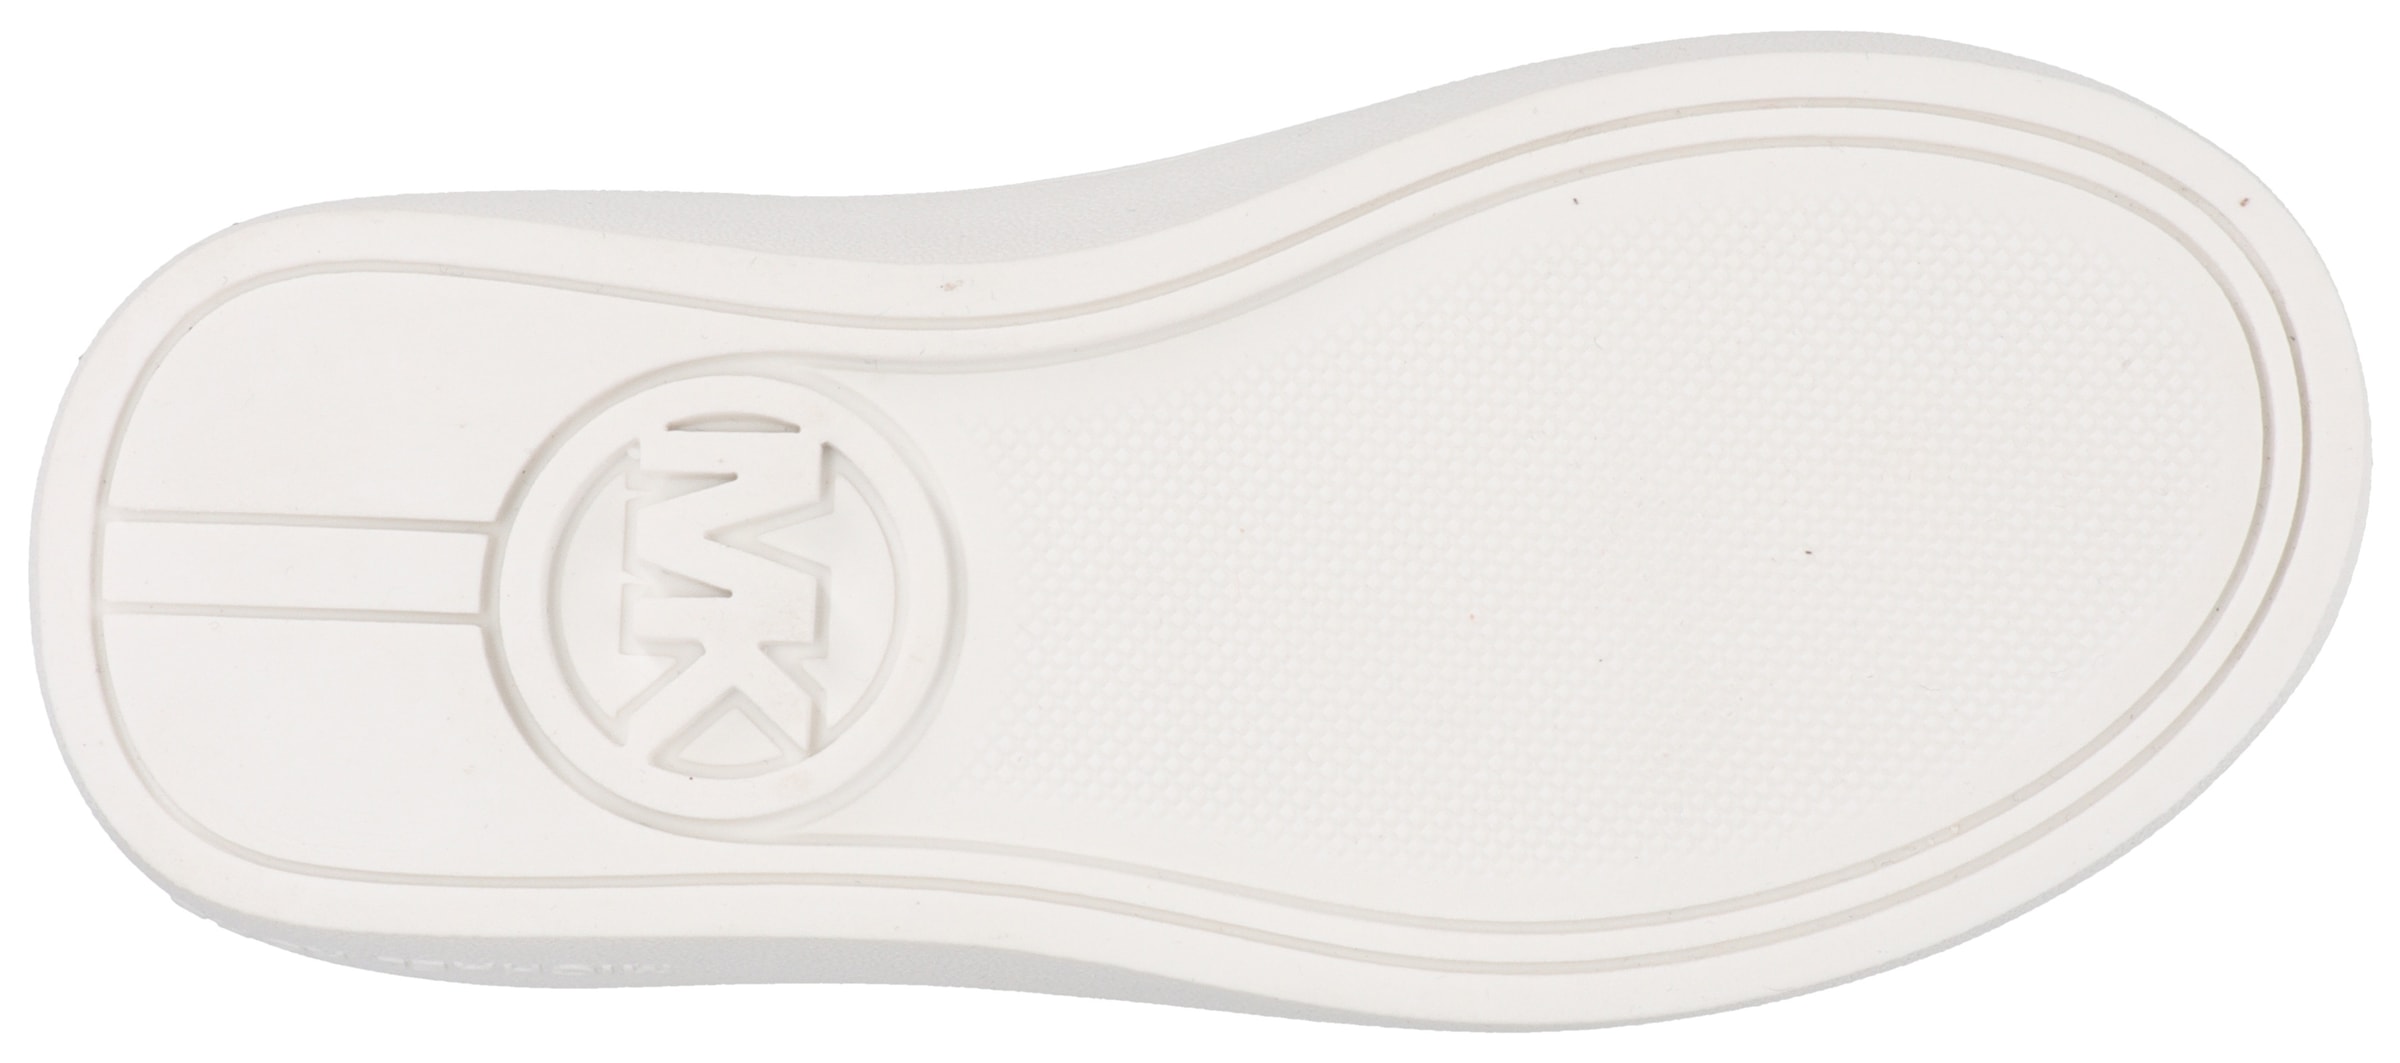 MICHAEL KORS KIDS Sneaker »JEM MONOGRAM PS«, auffälligem Michael Kors Logo, Freizeitschuh, Halbschuh, Schnürer